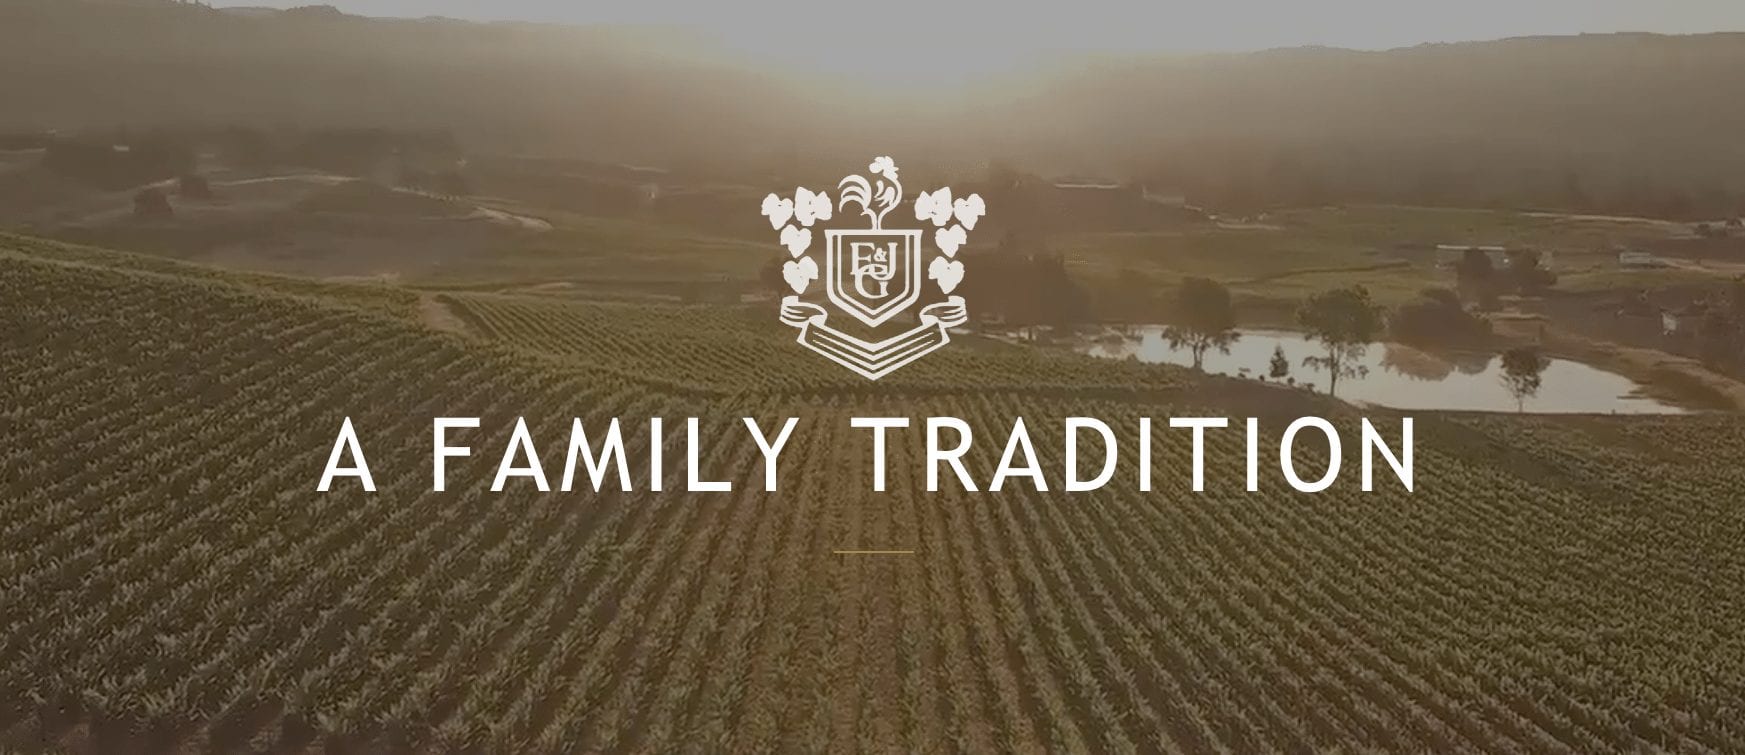 E&J Gallo Wines 'A Family Tradition' Logo